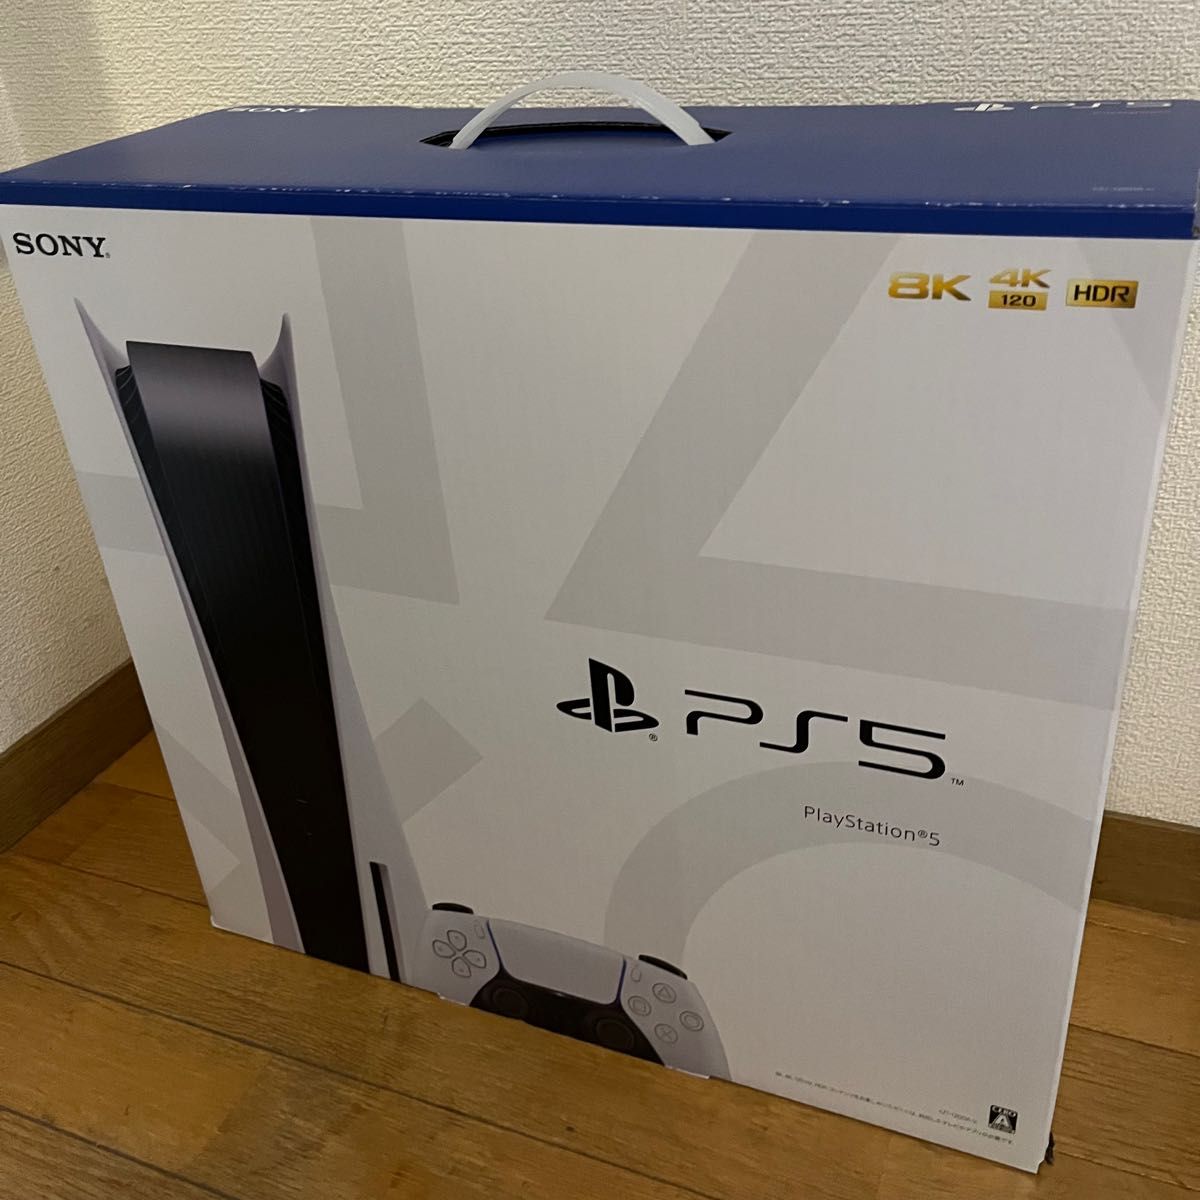 PlayStation 5 (CFI-1200A01)細かなスレあり | myglobaltax.com